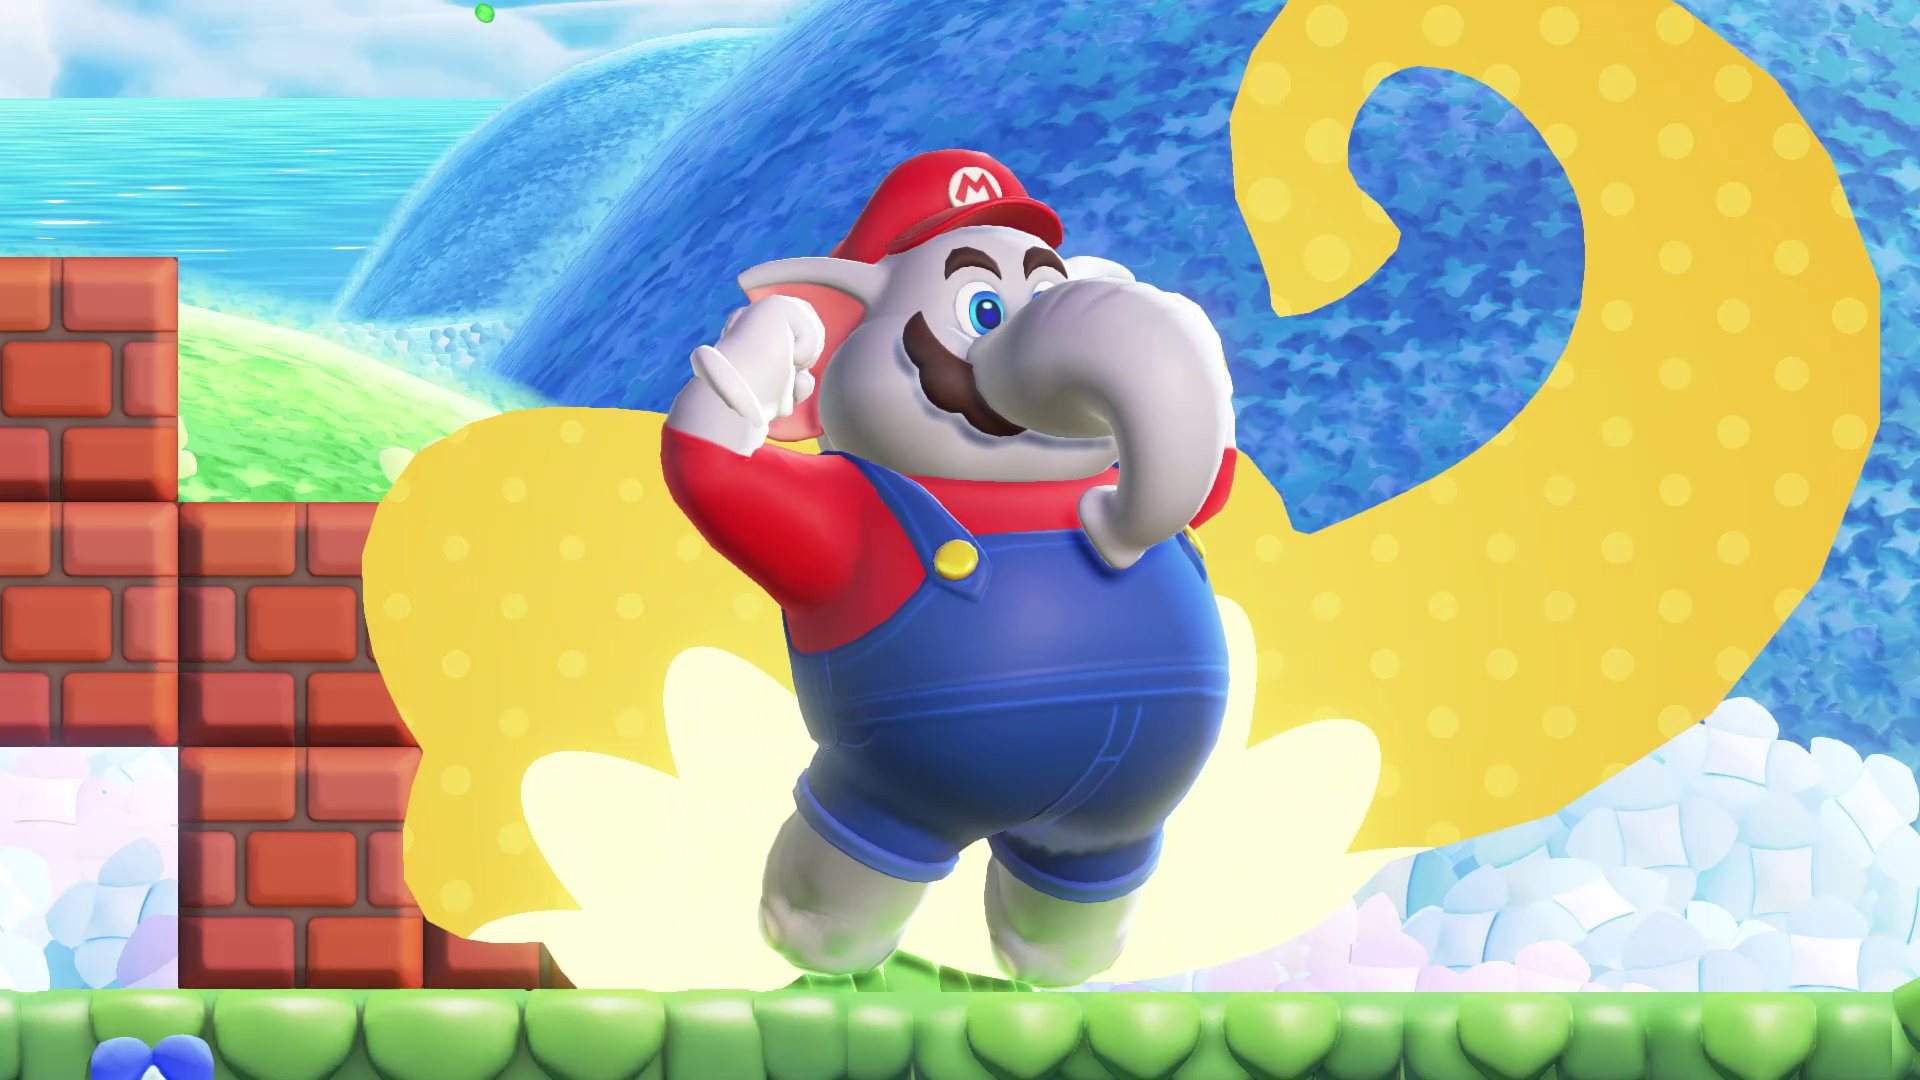 Video Game Super Mario Bros. Wonder HD Wallpaper | Background Image